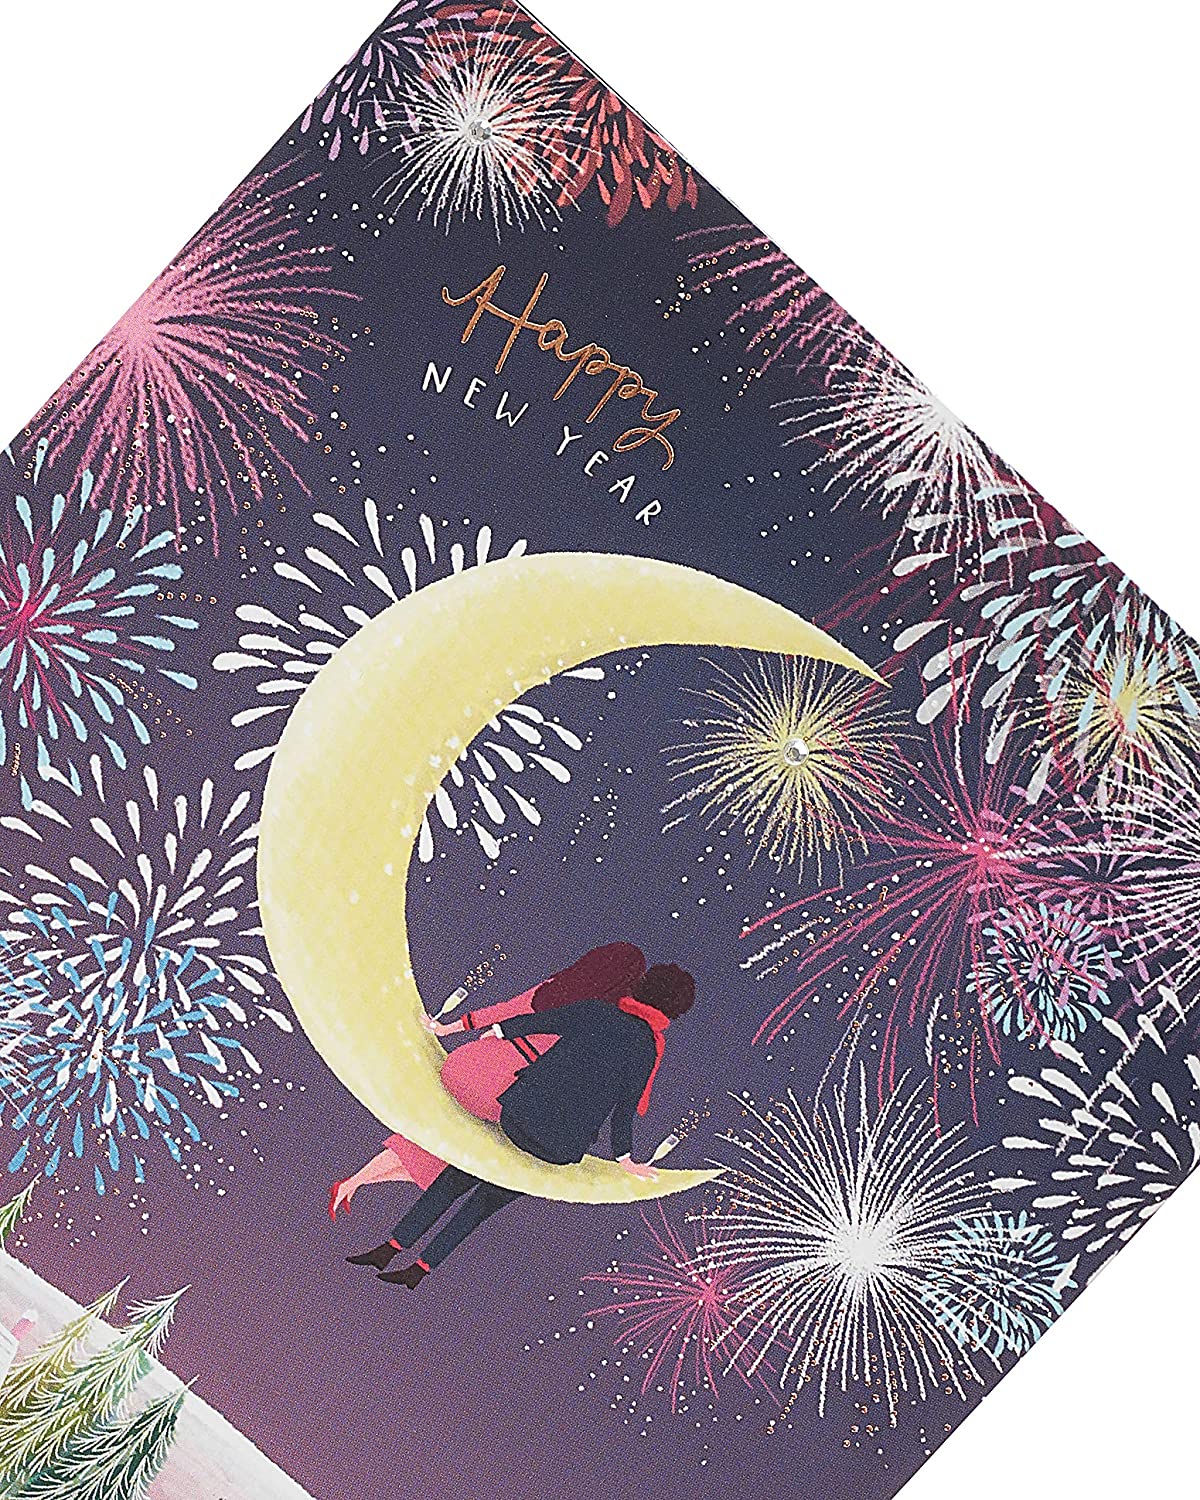 Happy New Year Card Beautiful Firework Design